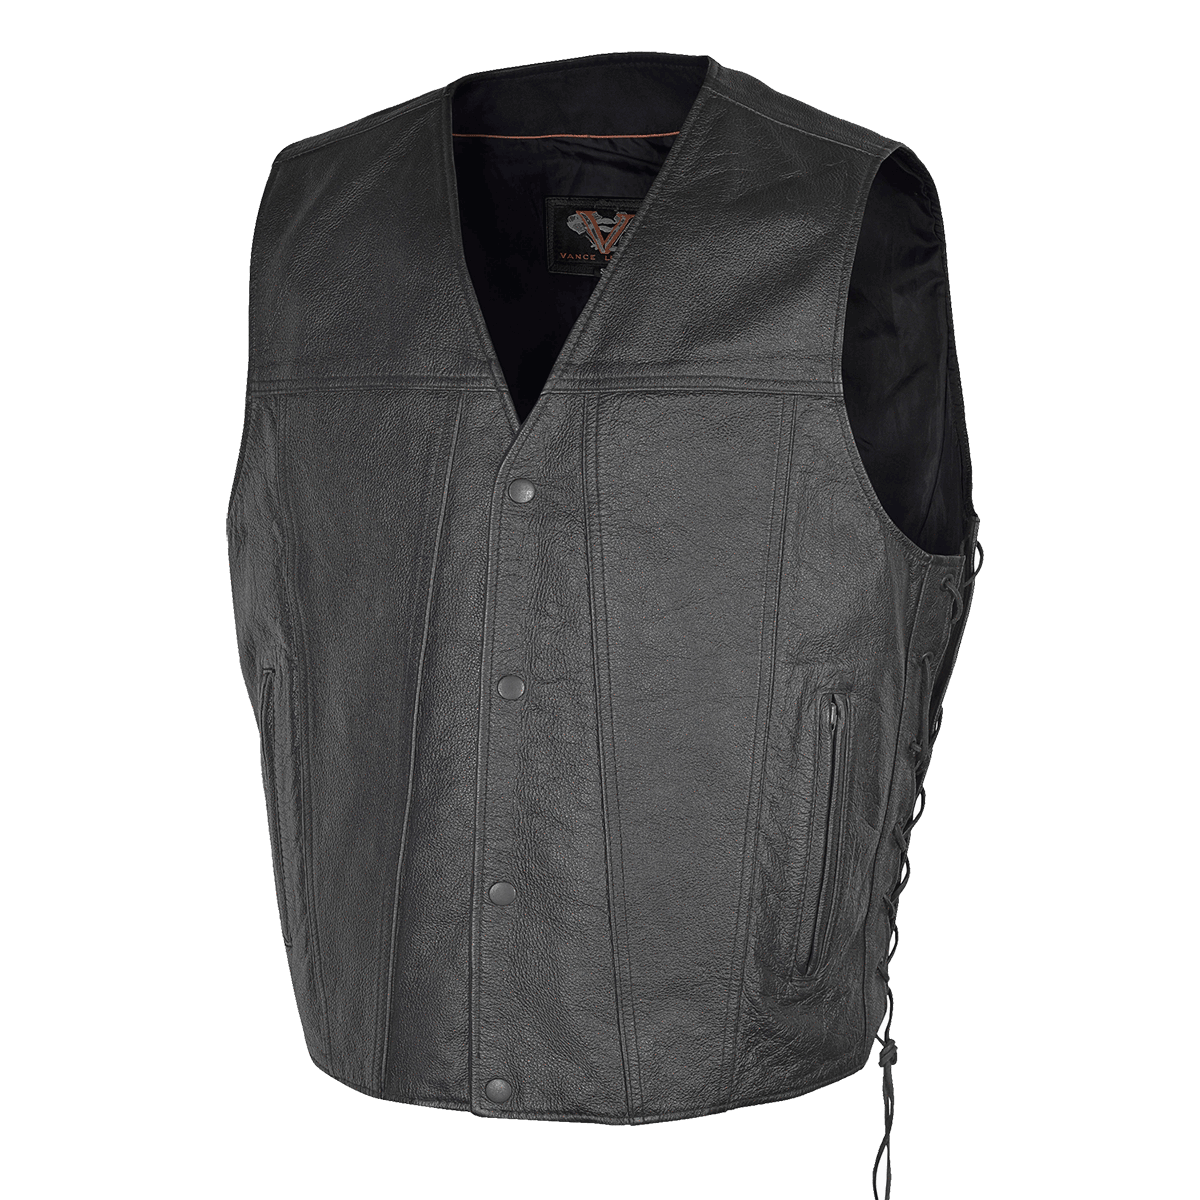 VL940C Vance Leather Gambler Style Premium Cowhide Leather Vest